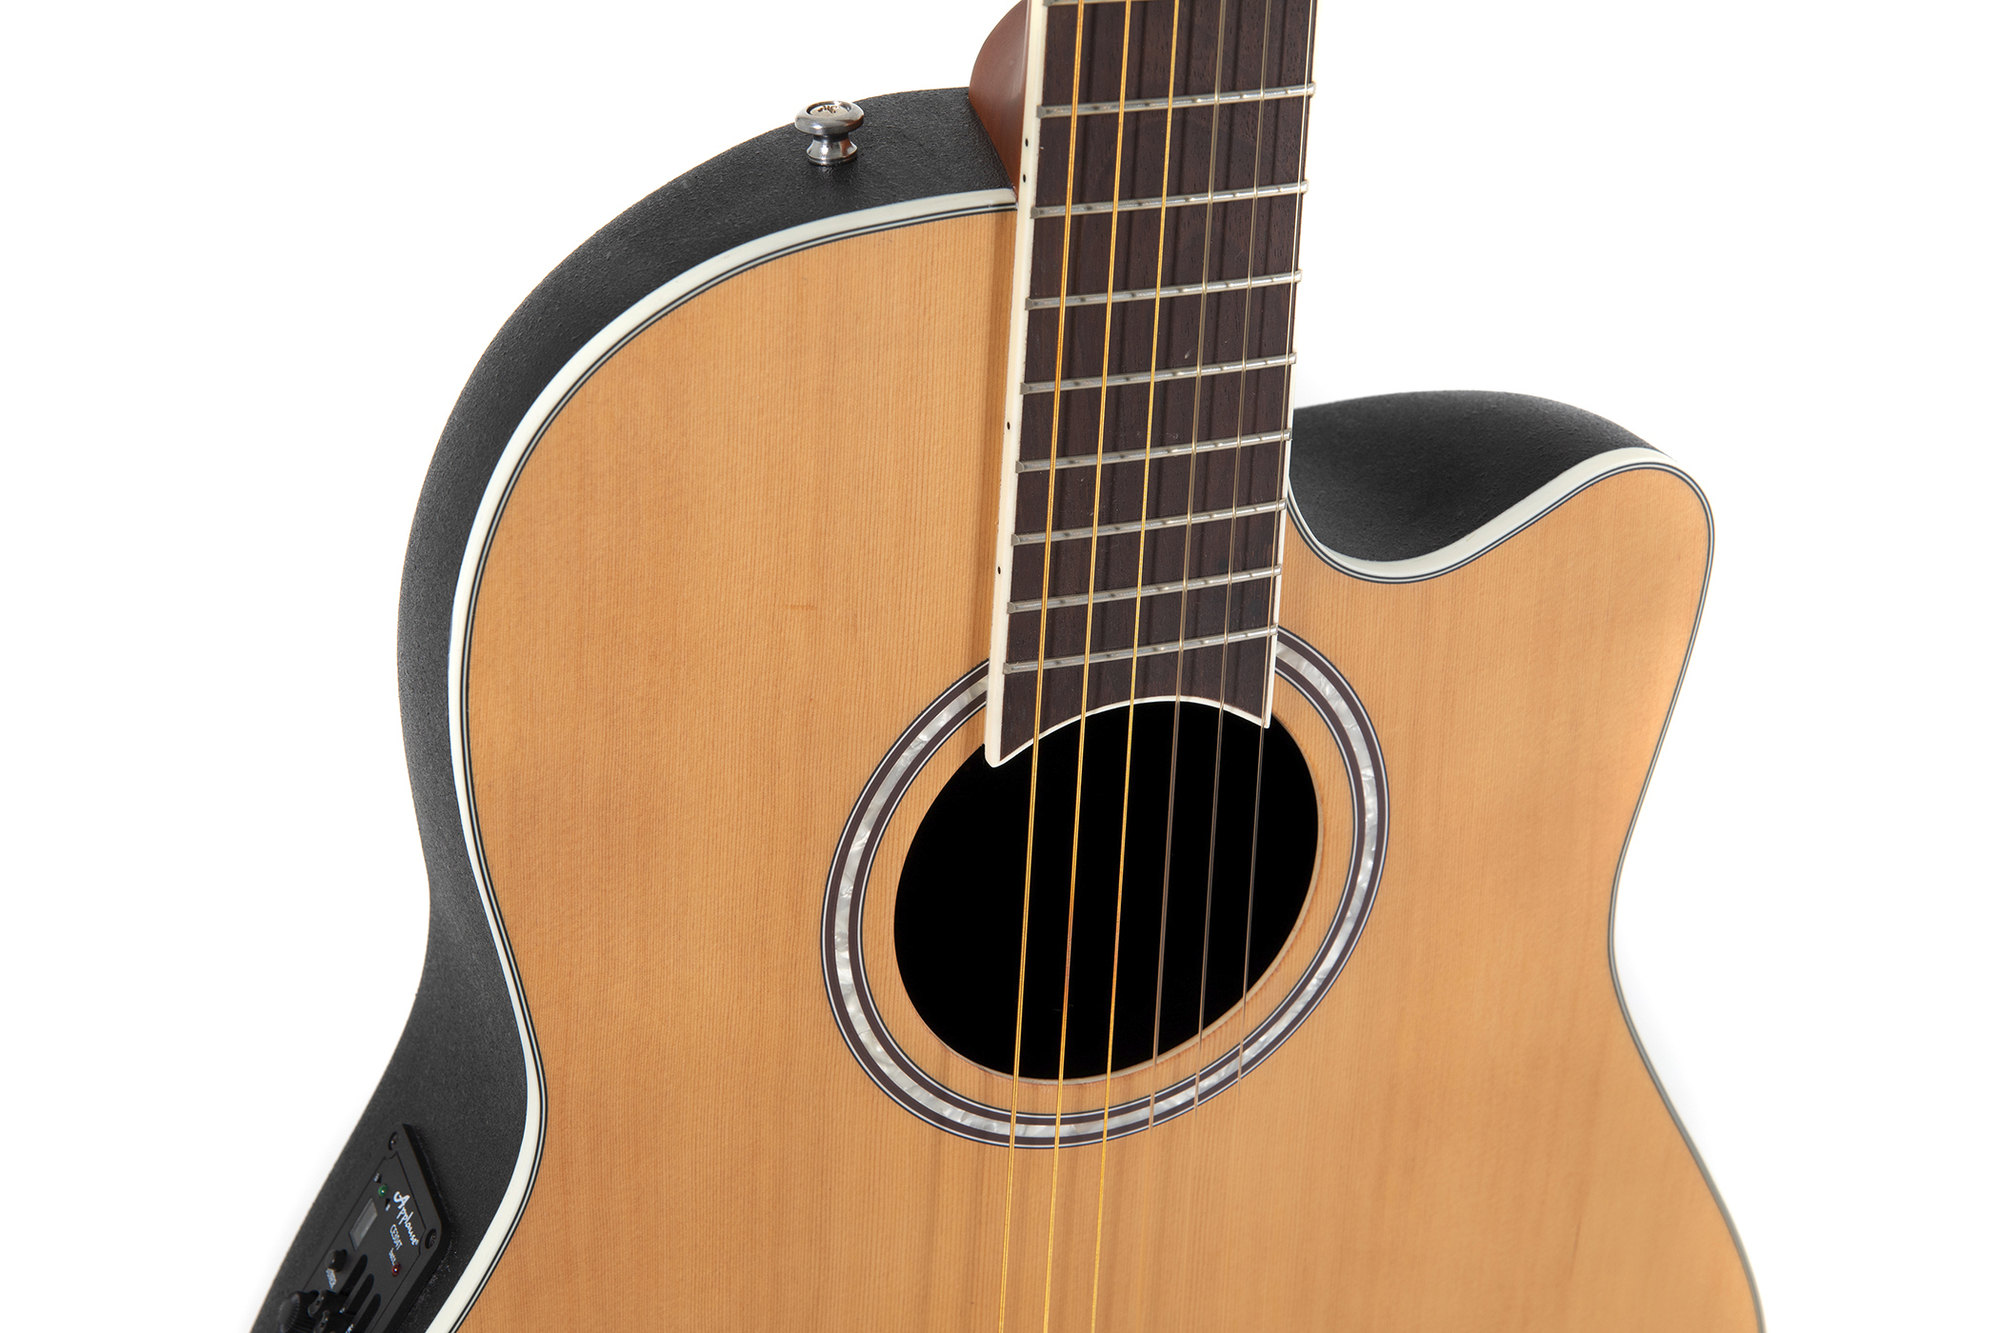 Ovation Applause Gitarre mit Nylon Saiten und eingebautem Tonabnehmer/Stimmgerät